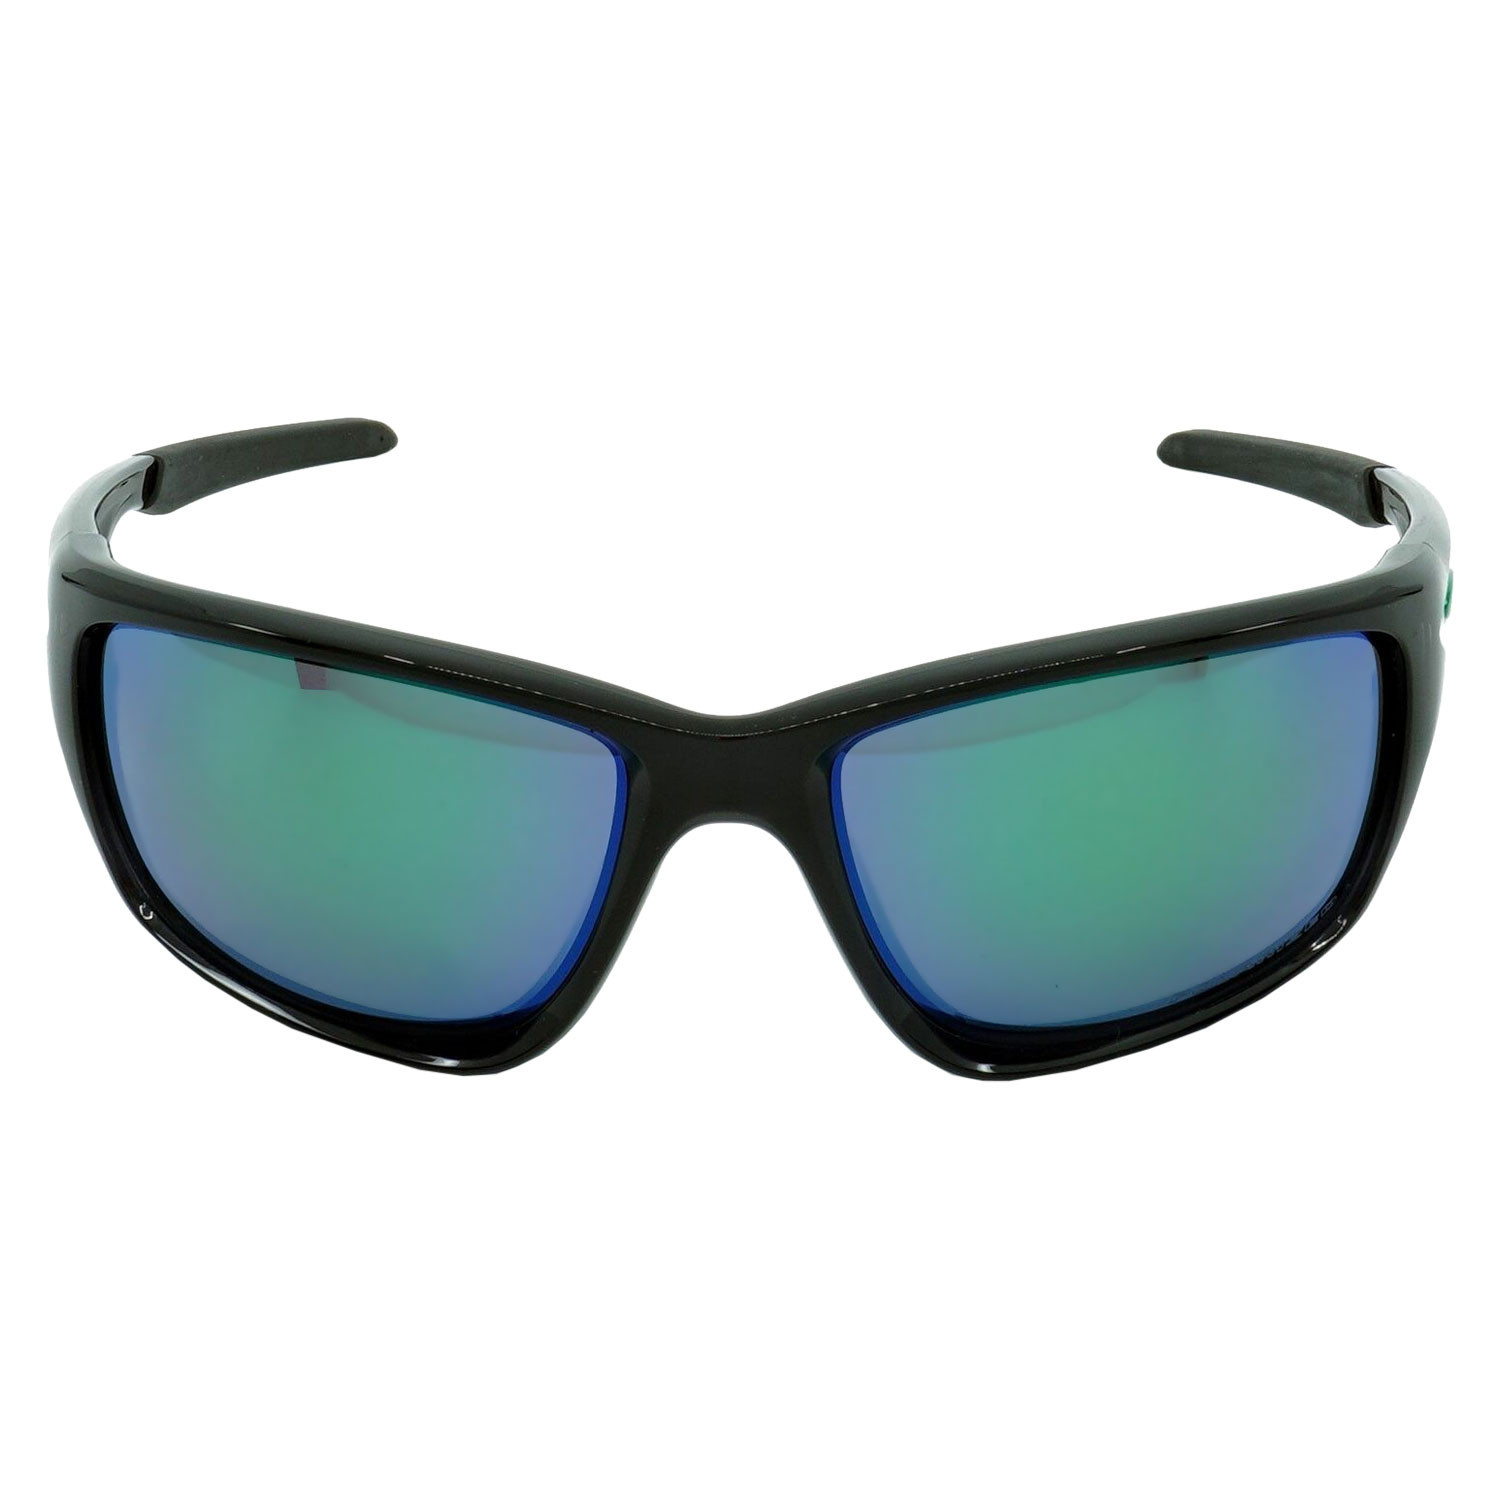 Oakley Canteen Polarized Sunglasses- Black Ink/Jade Iridium